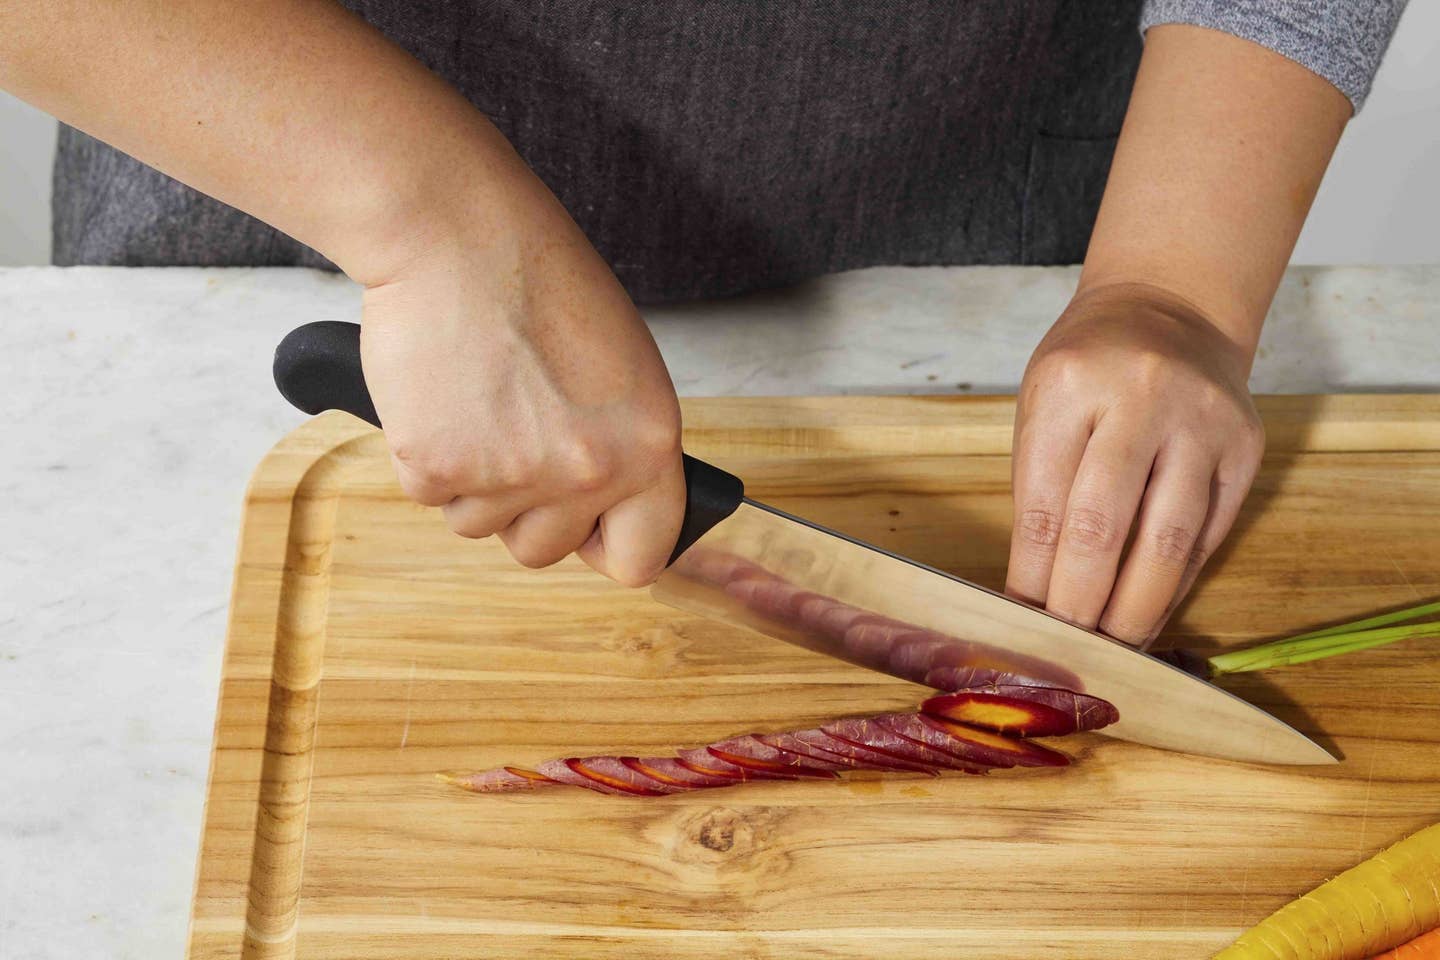 A knife bias slices